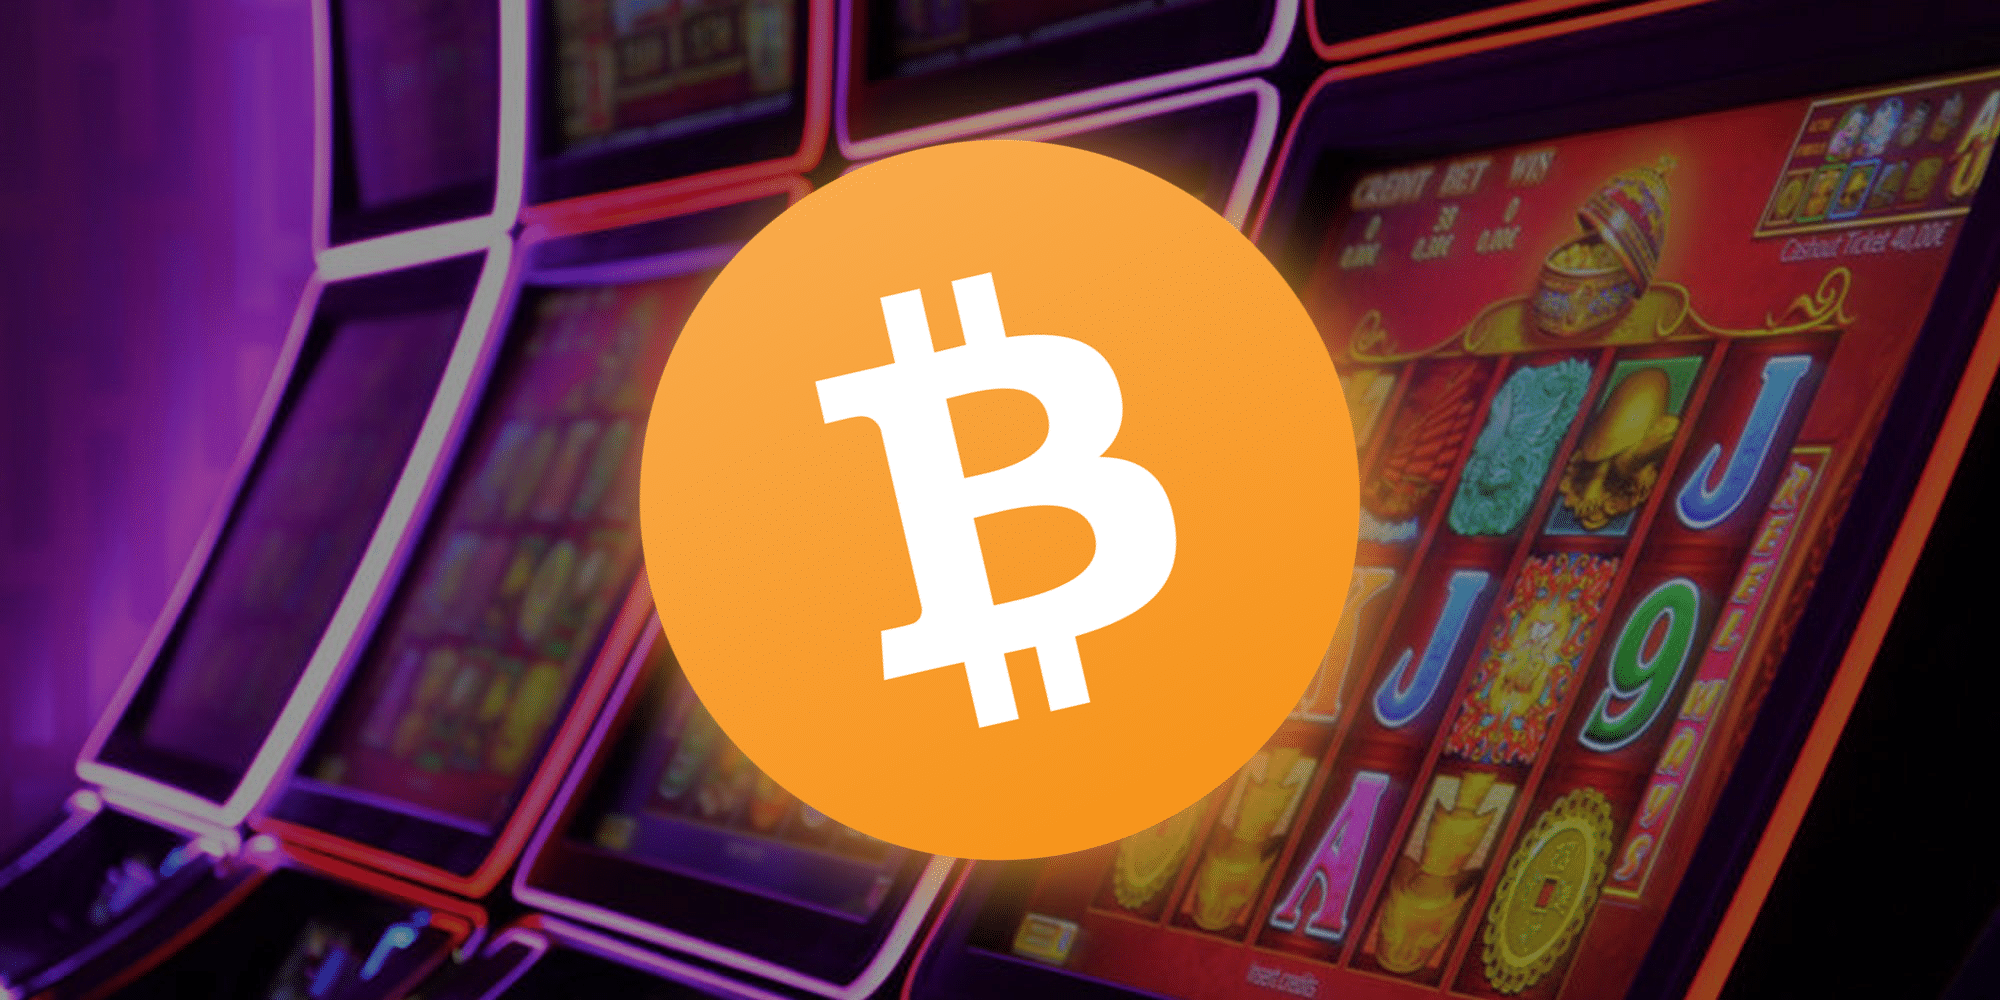 Dragons way bitcoin slot machine